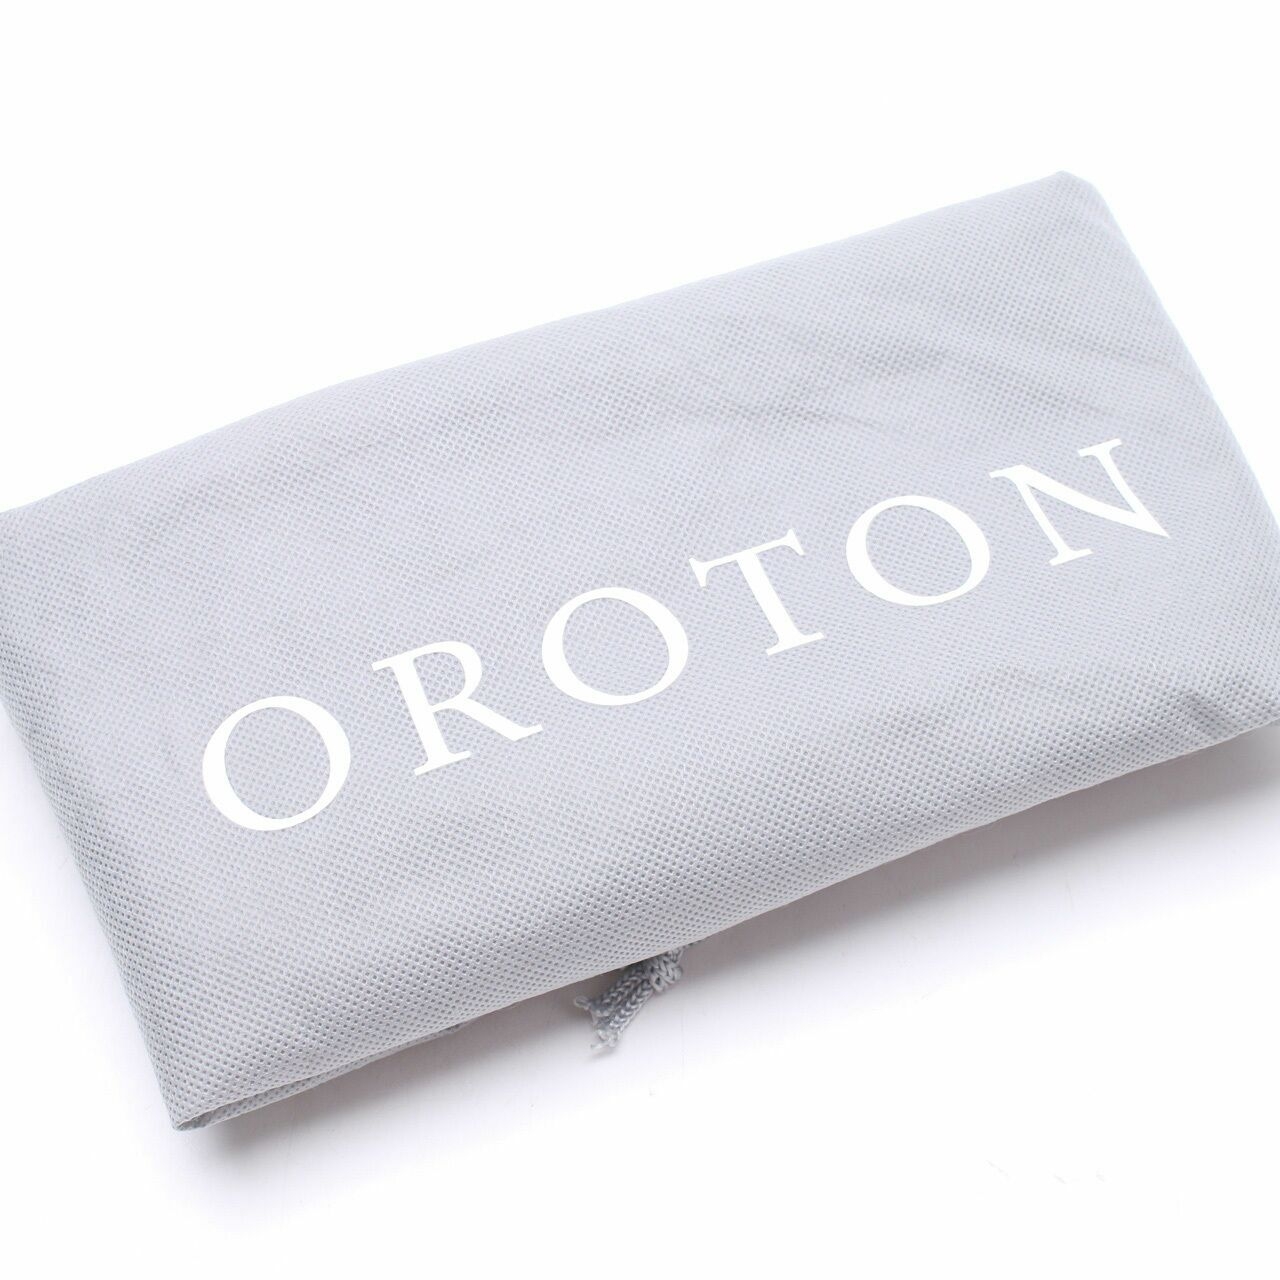 Oroton Green Handbag